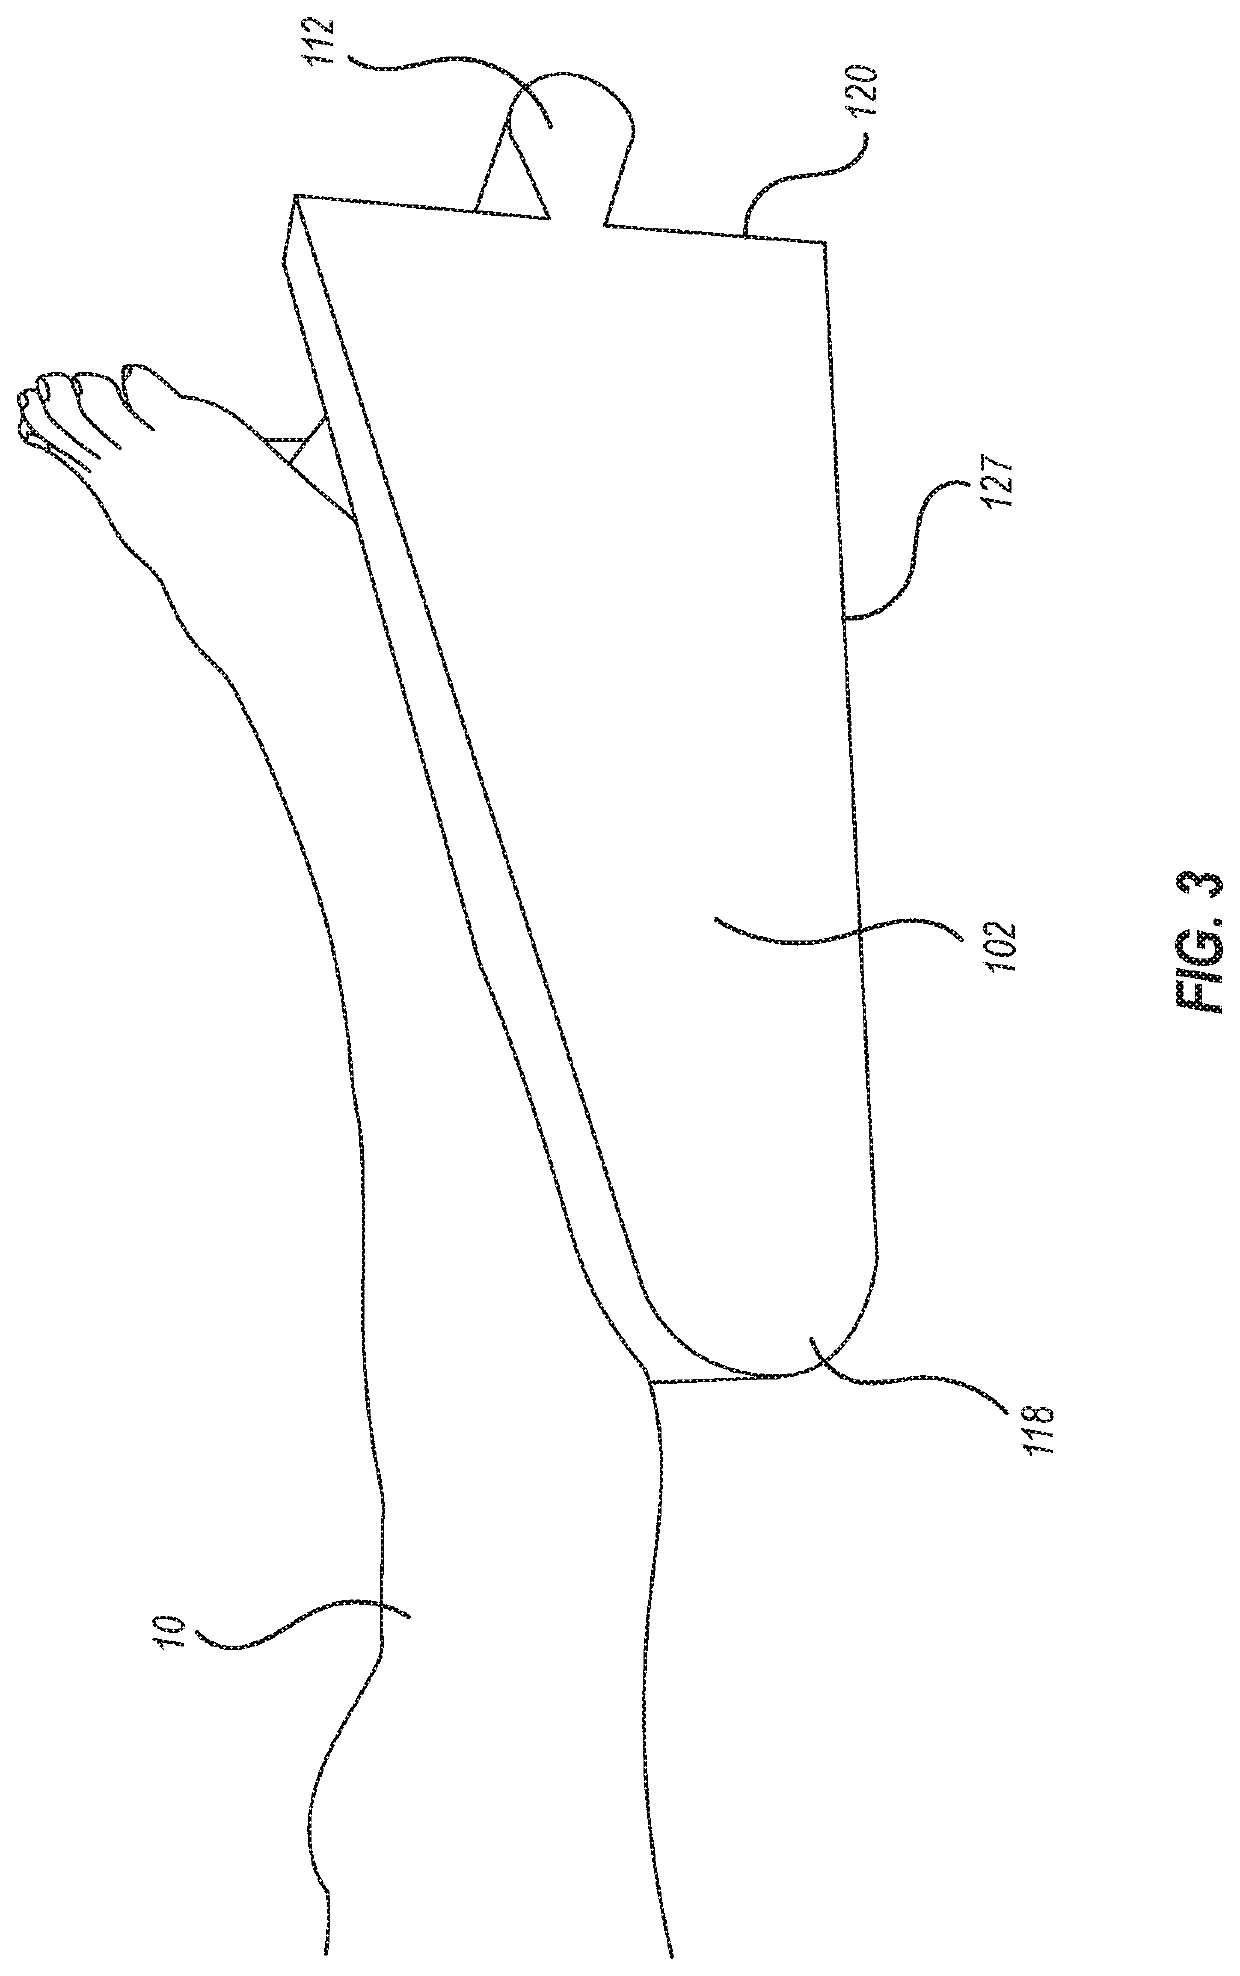 Modular Knee Extension Device